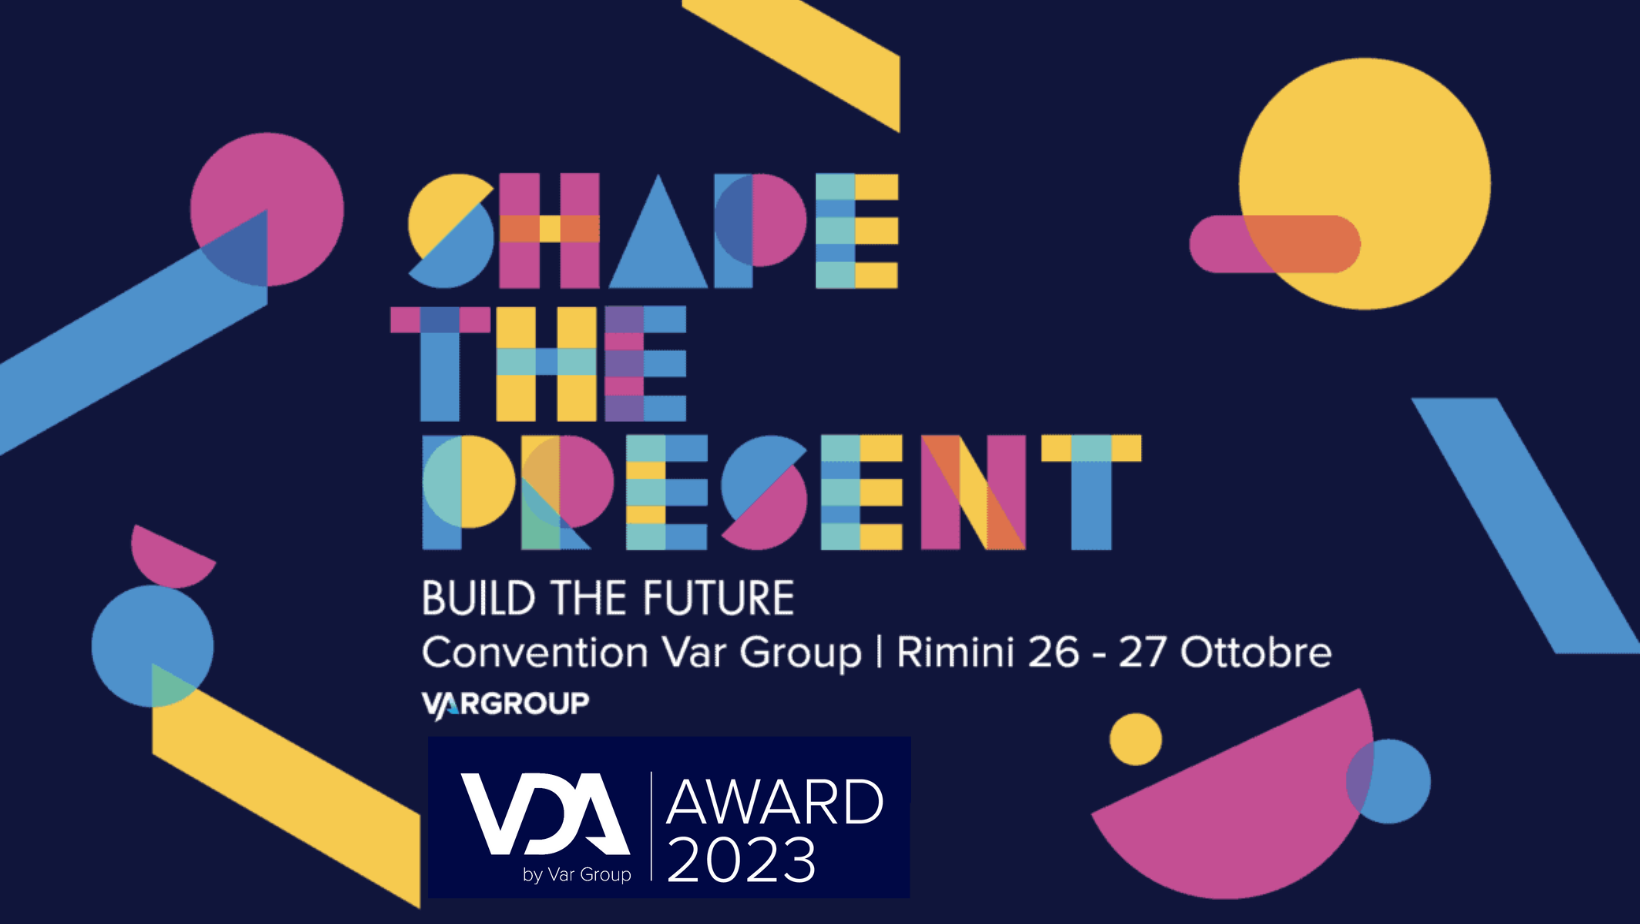 VDA Award